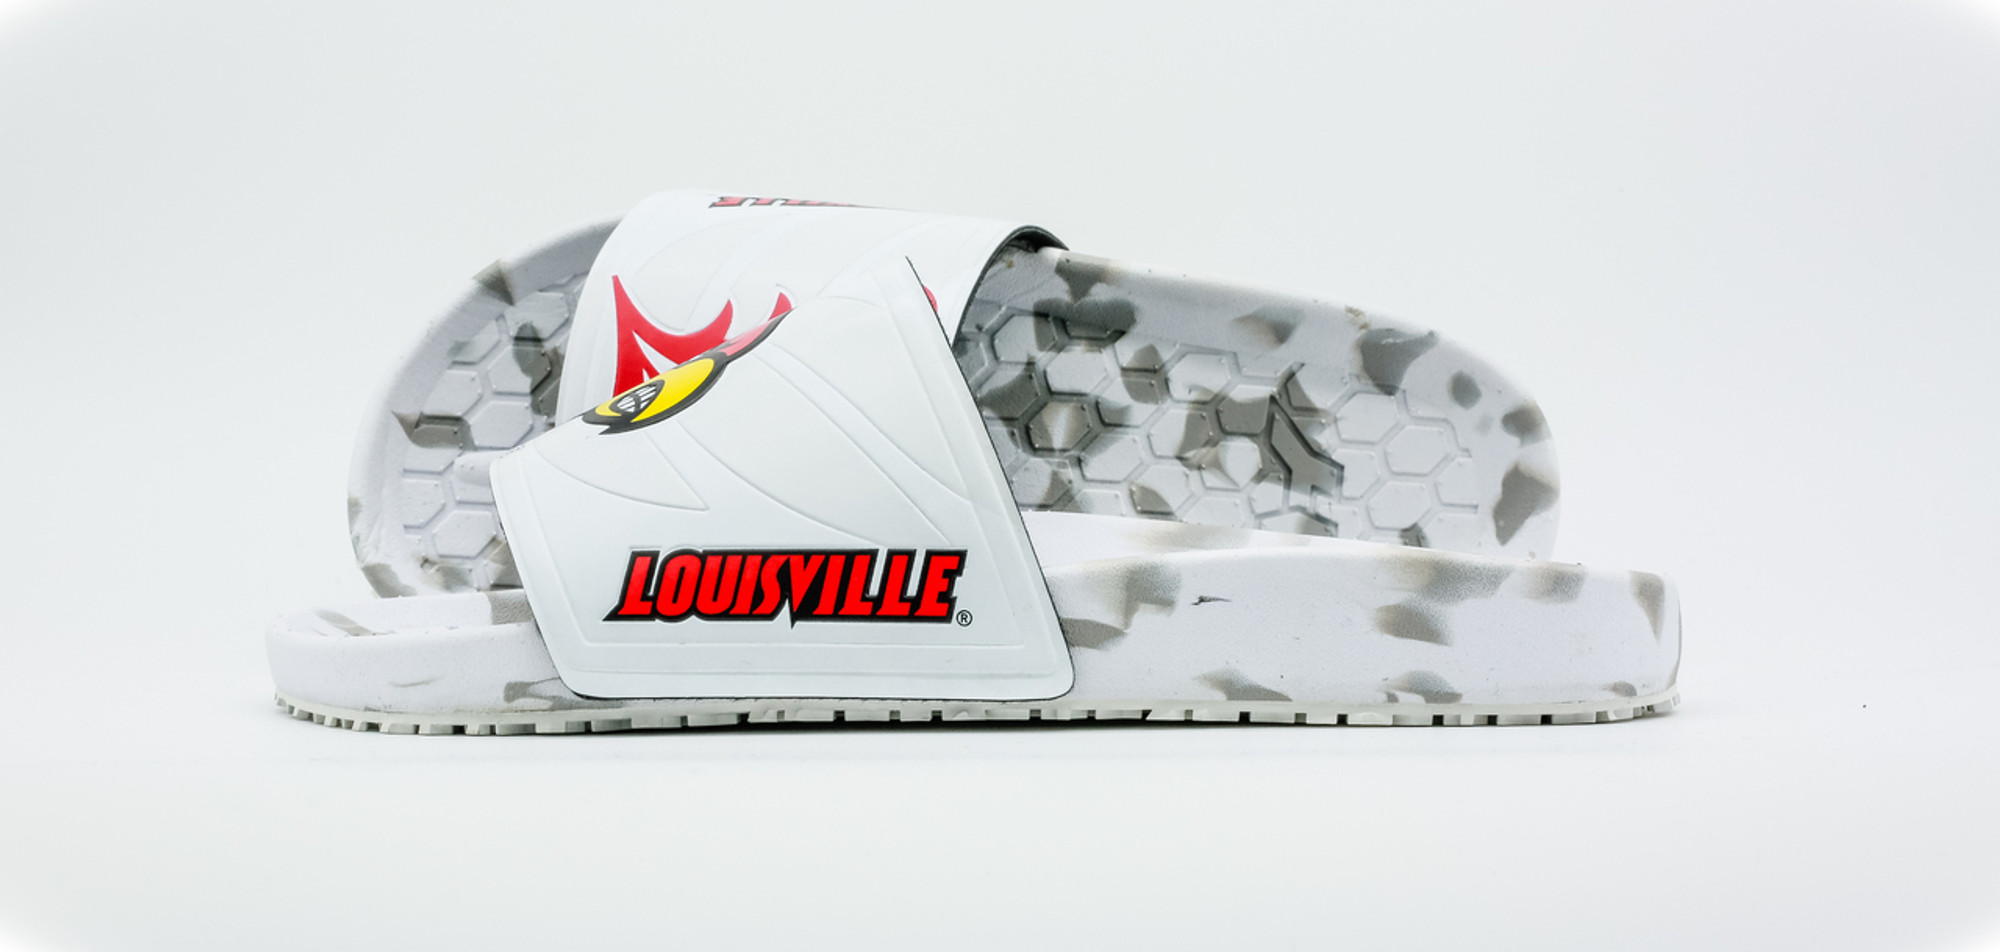 University of Louisville Sandals, Louisville Cardinals Flip Flips